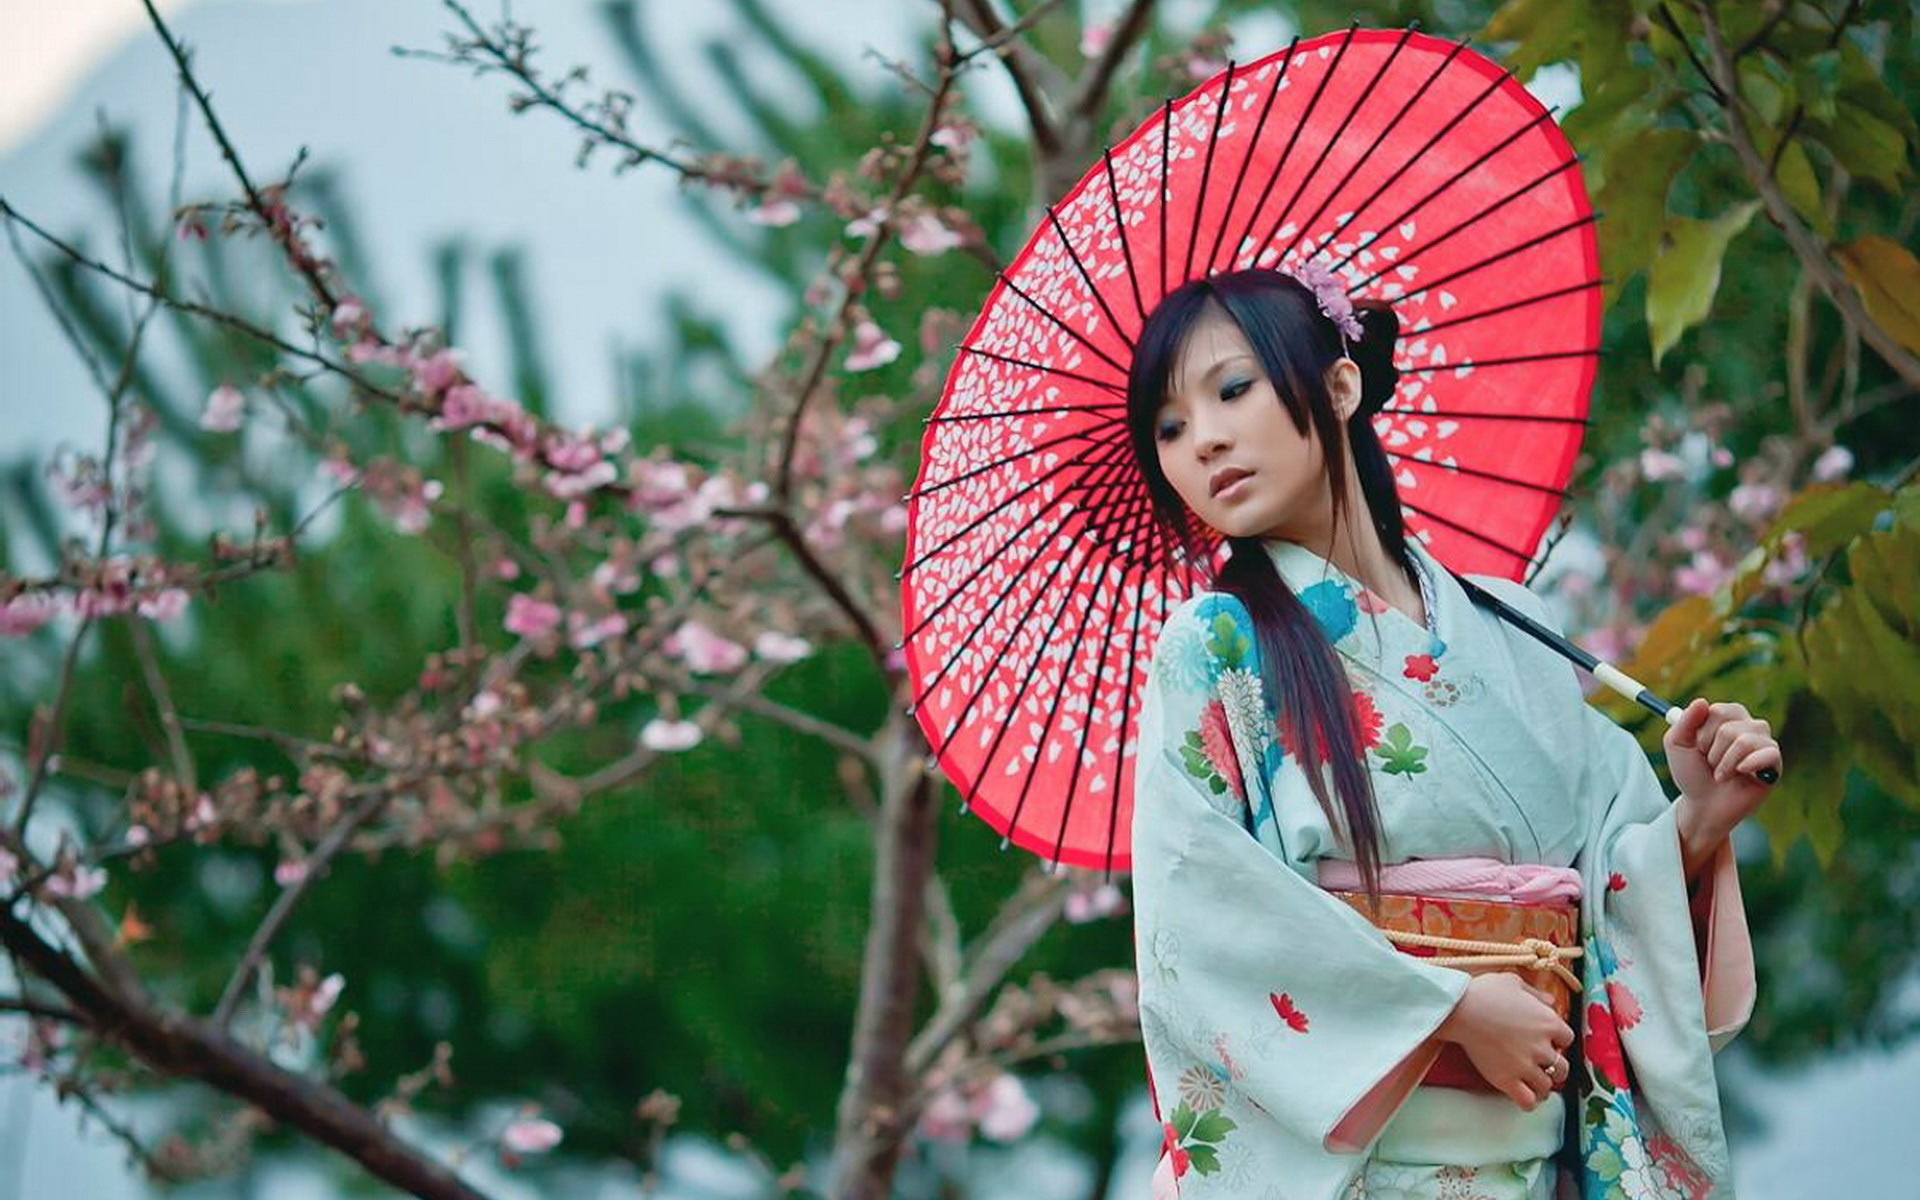 Wallpaper Kimono Umbrella Photos High Quality Pics